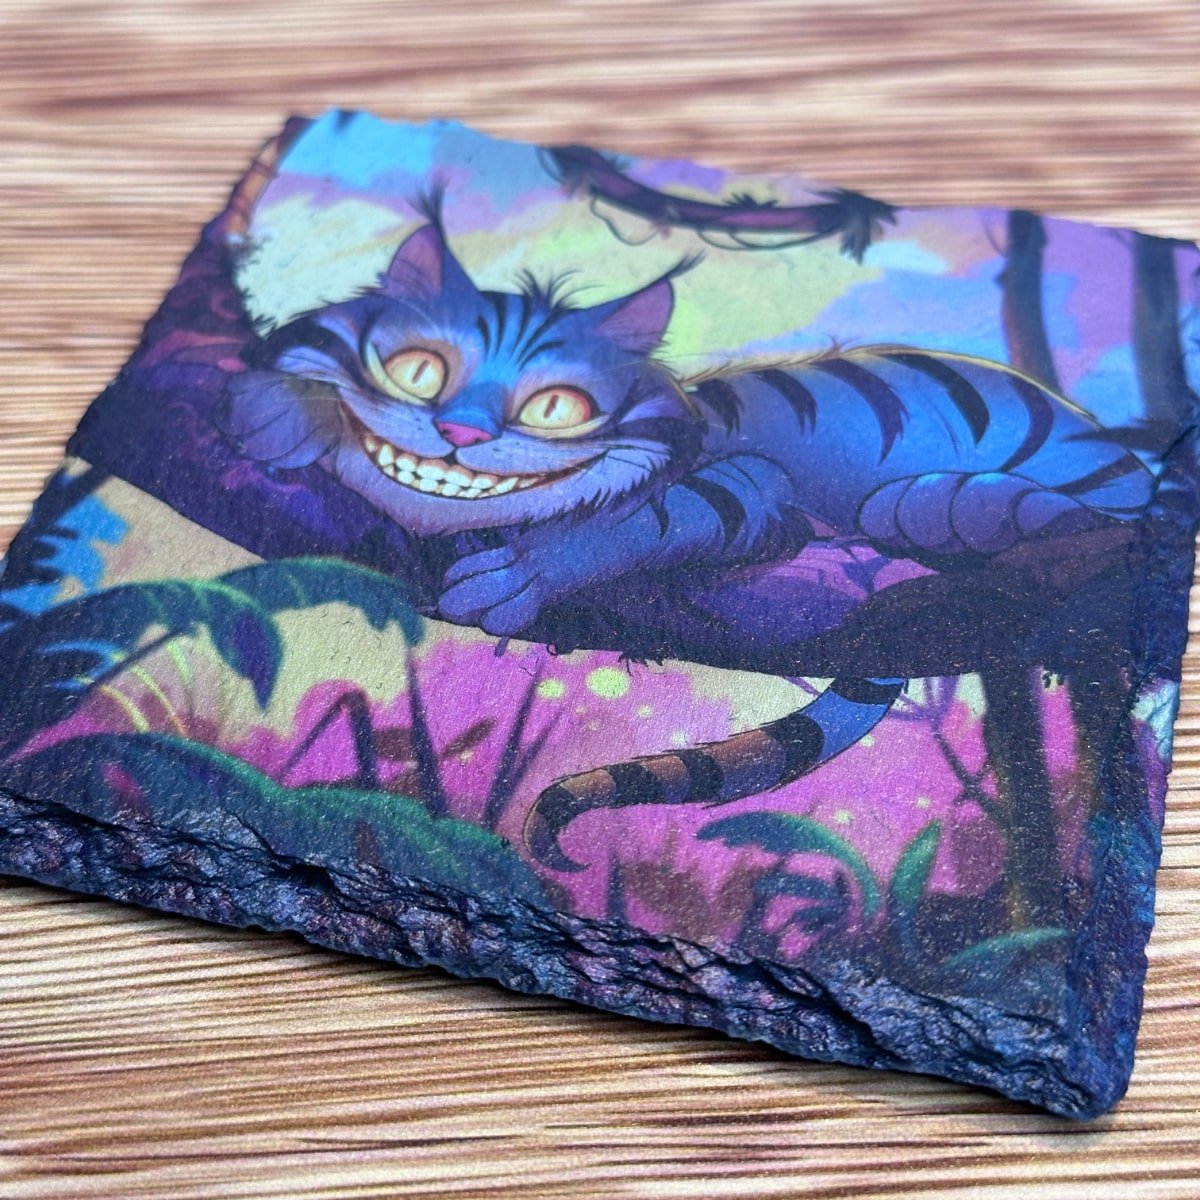 Alice in Wonderland Anime Style Slate Coaster - Cheshire Cat - GameOn.games